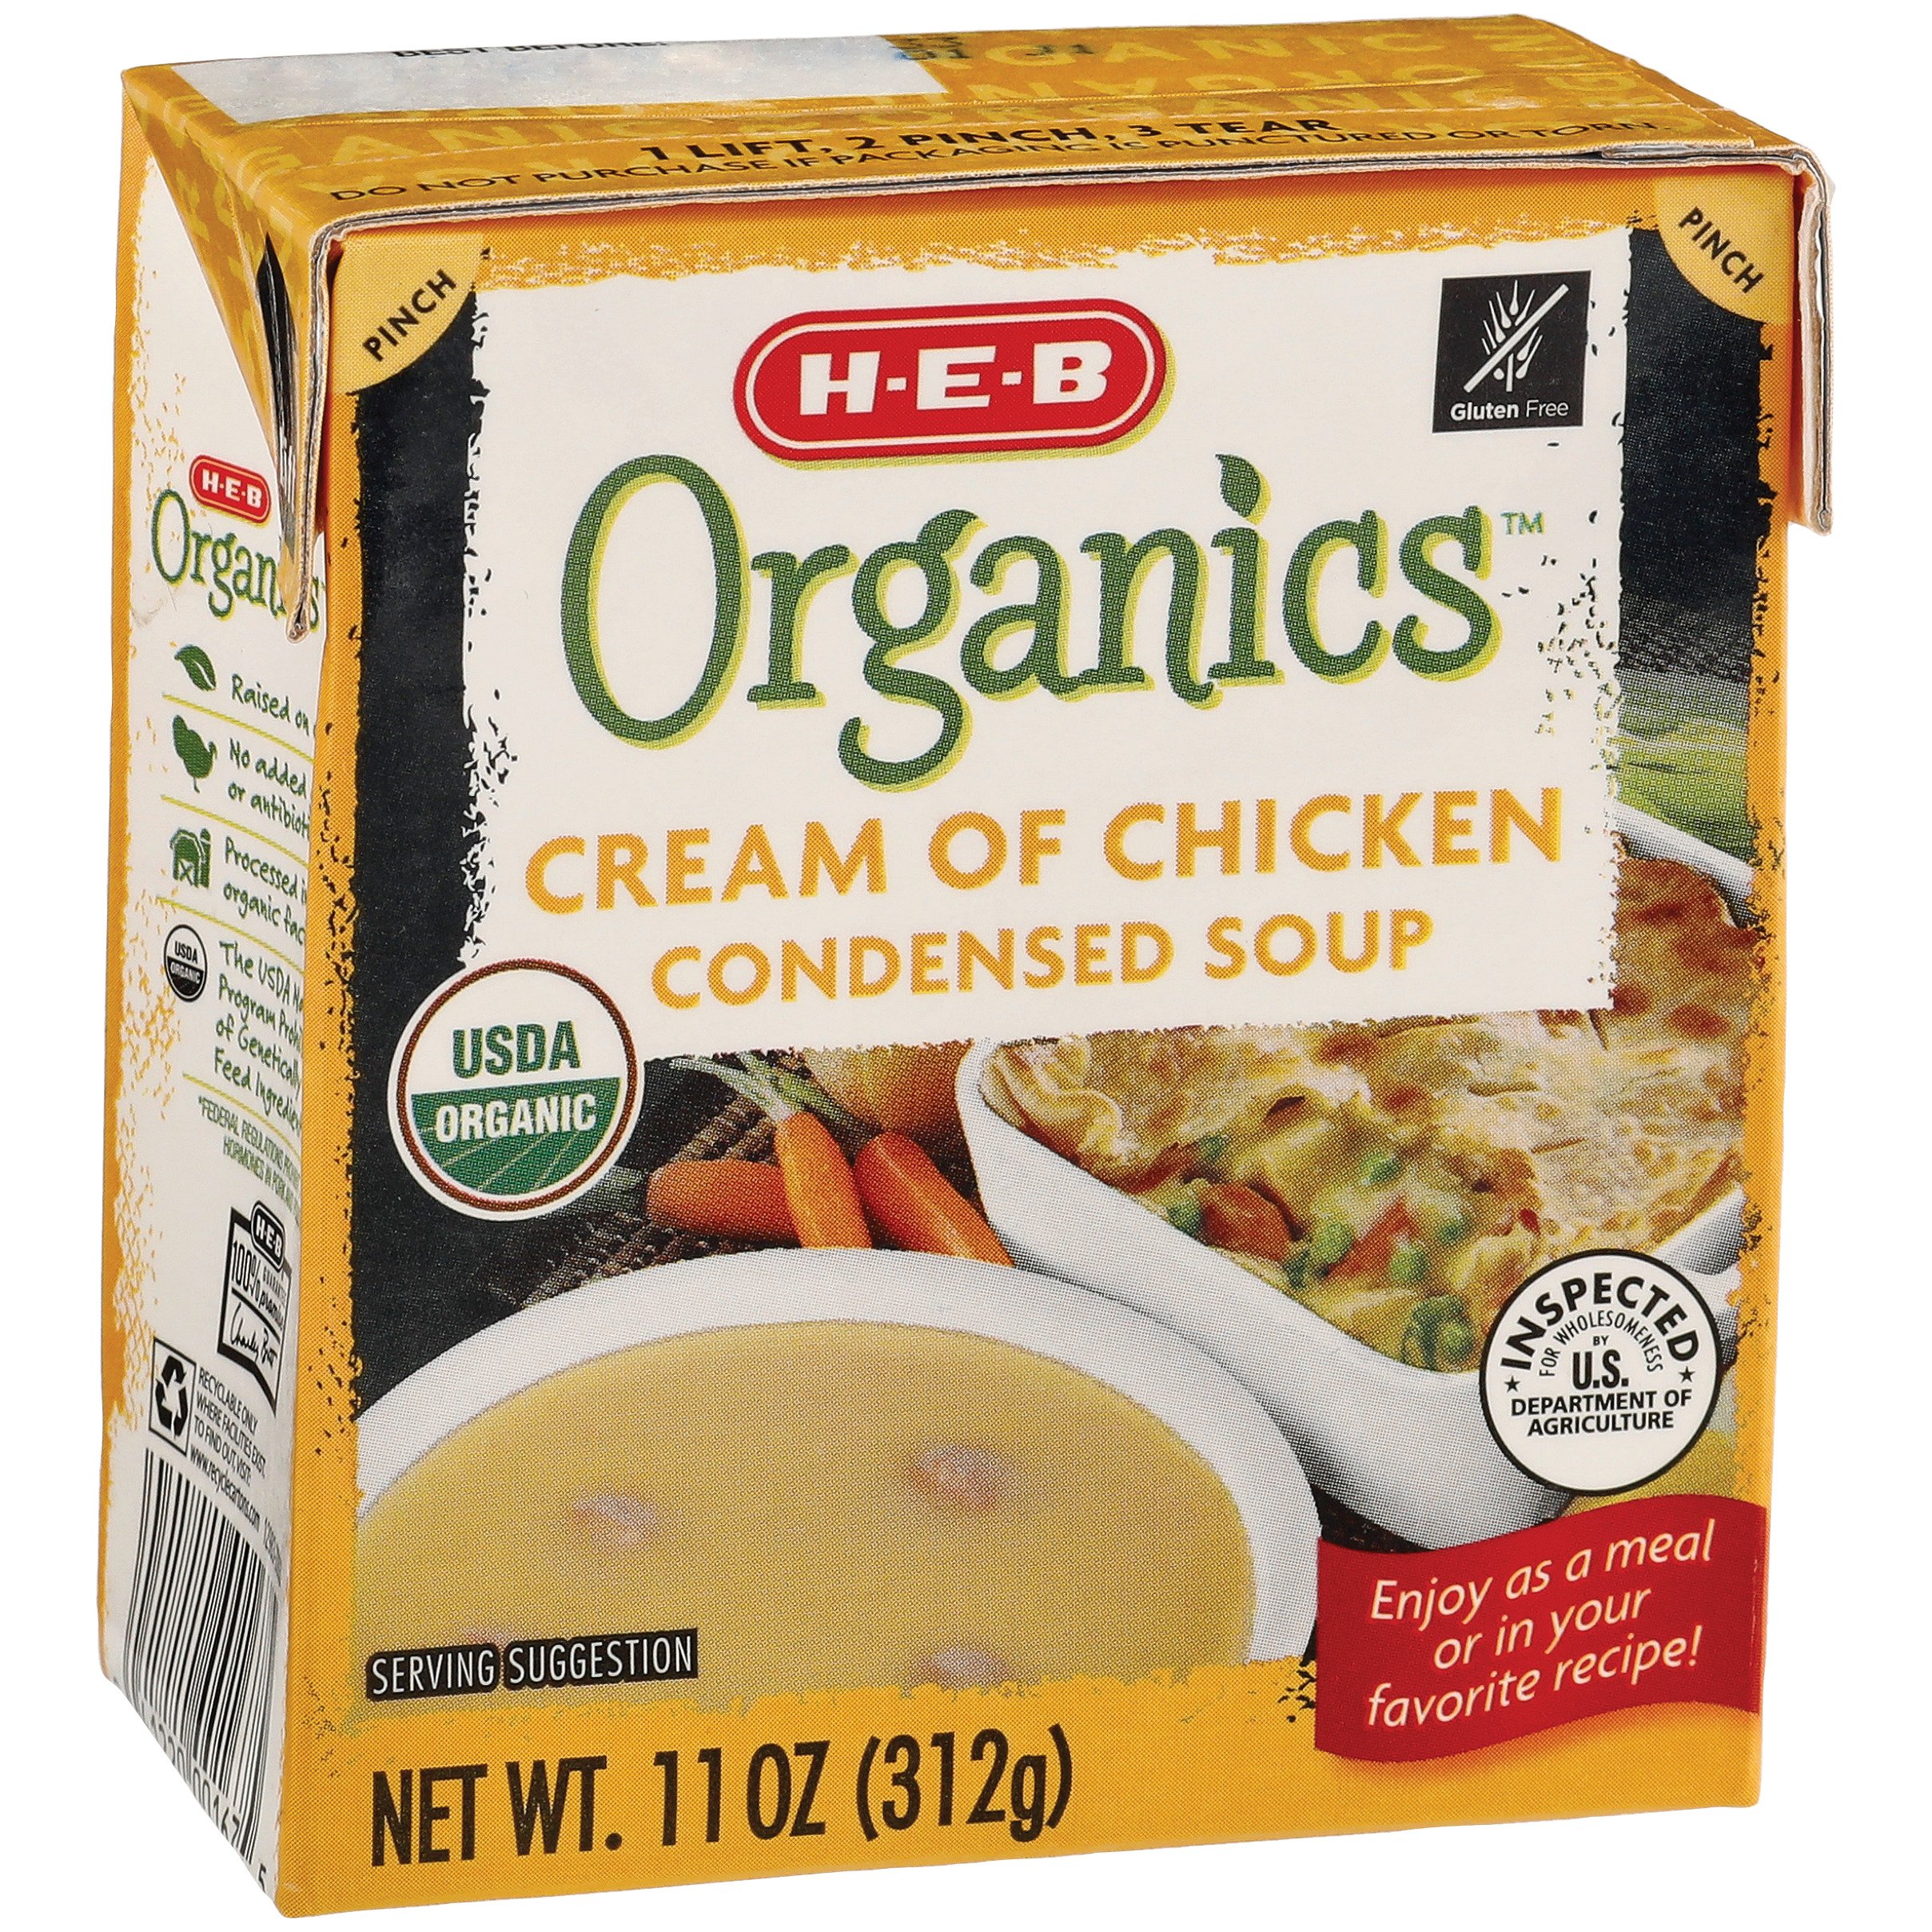 Homemade Cream of Chicken Soup (Gluten-Free) 